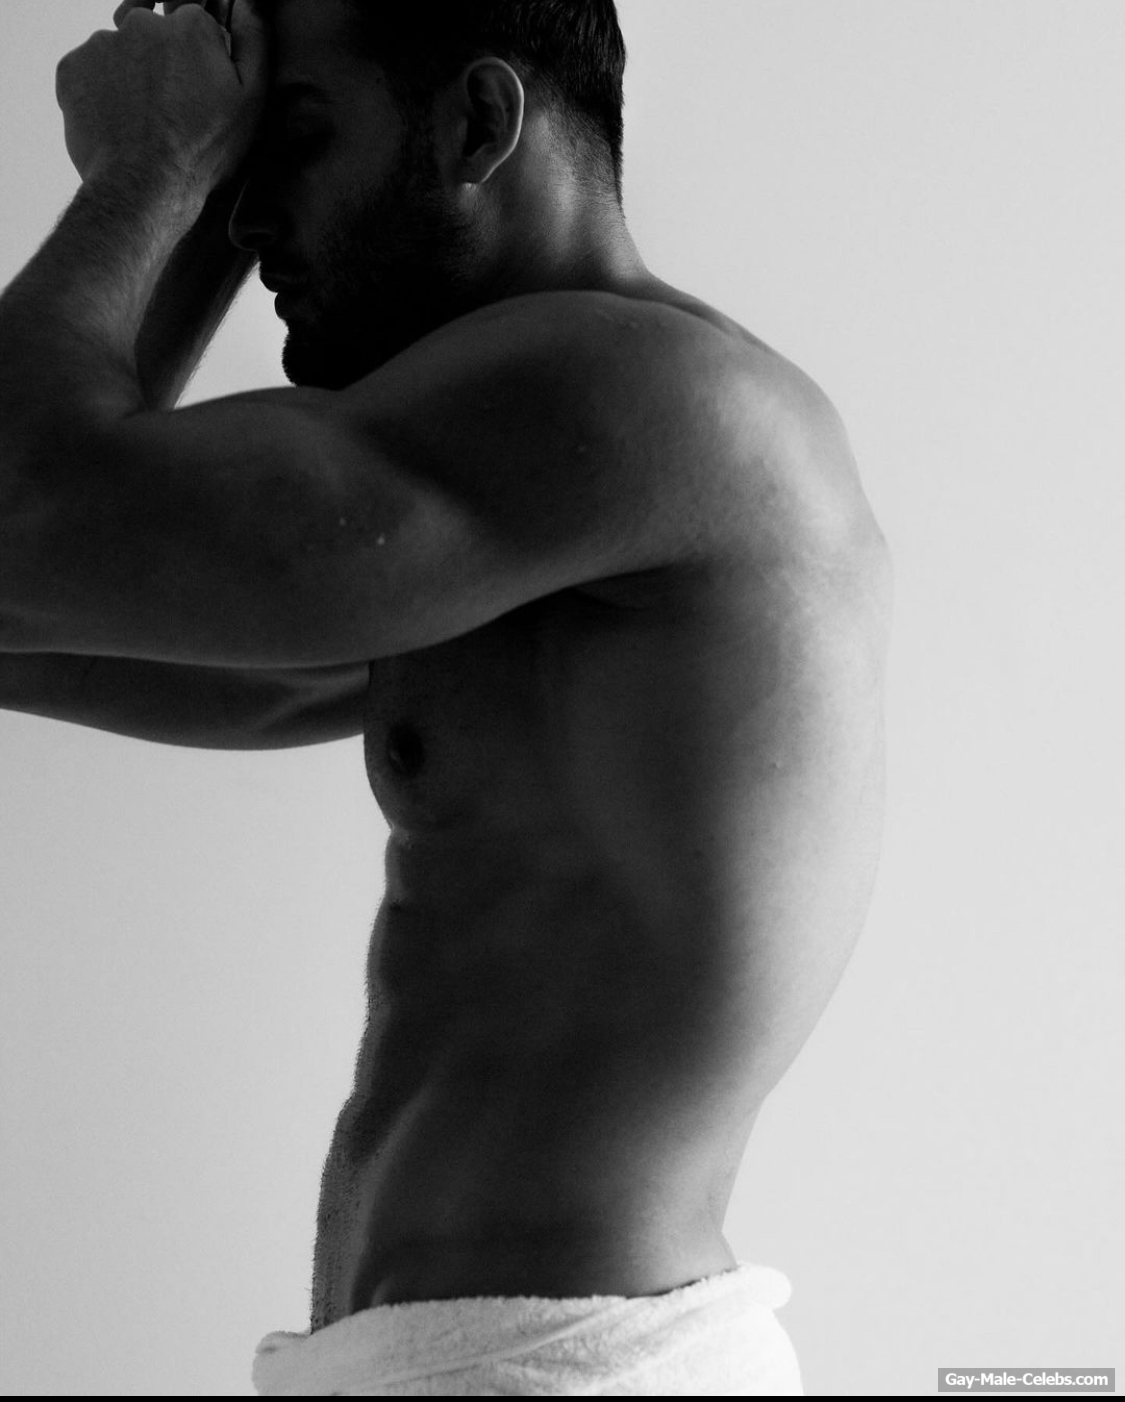 Sam Asghari shirtless photo-shoot